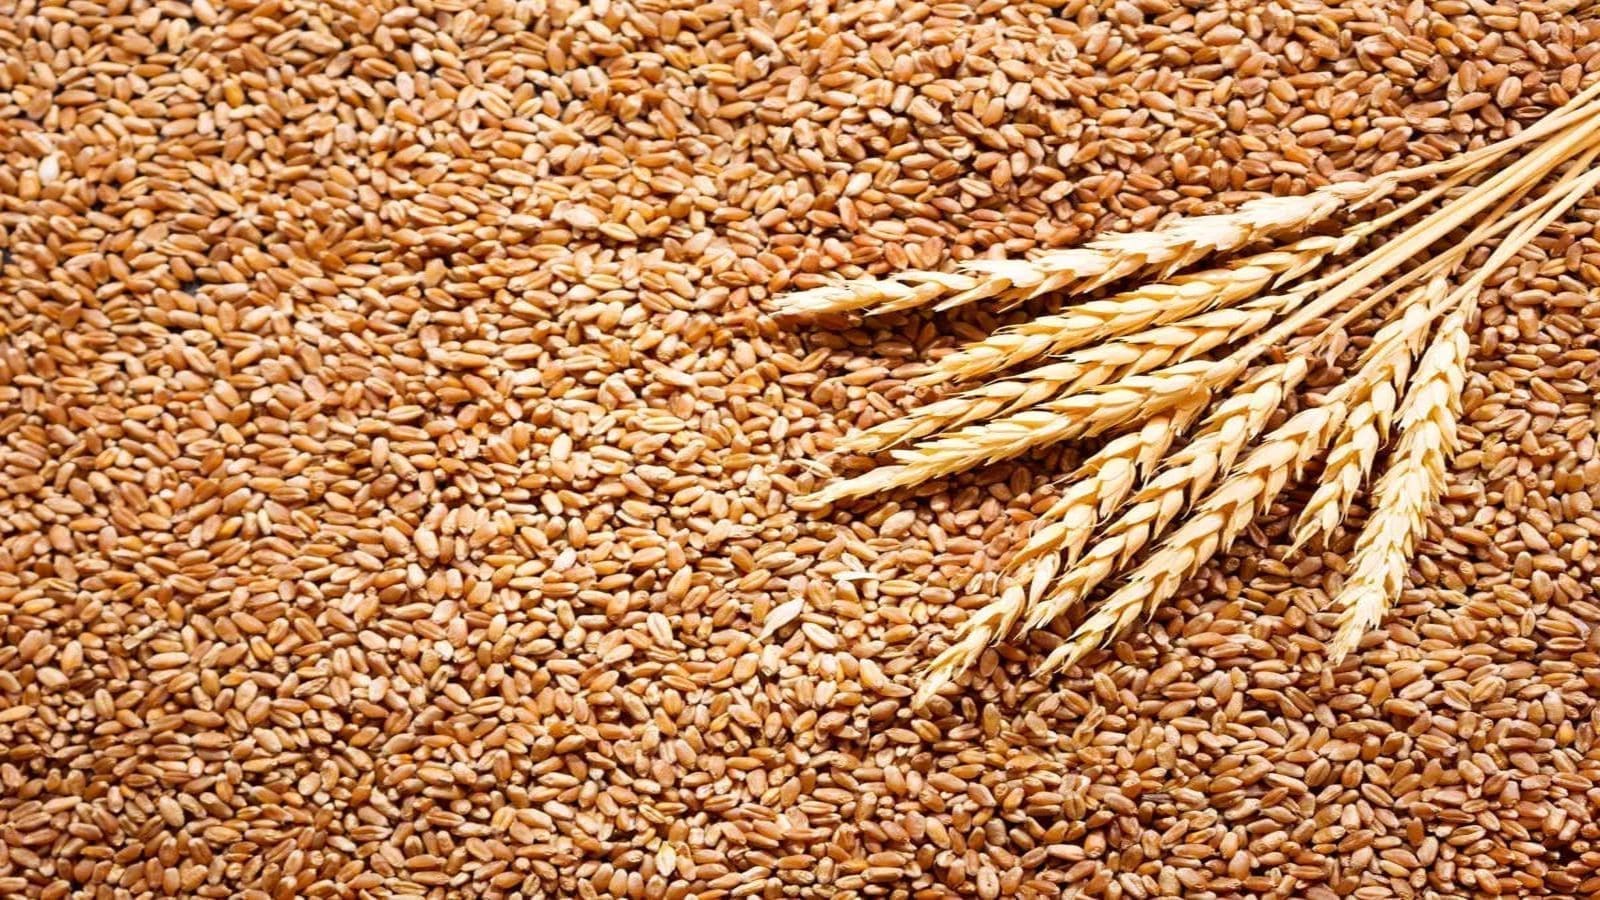 Wheat blast fungus threatens global wheat production, study warns